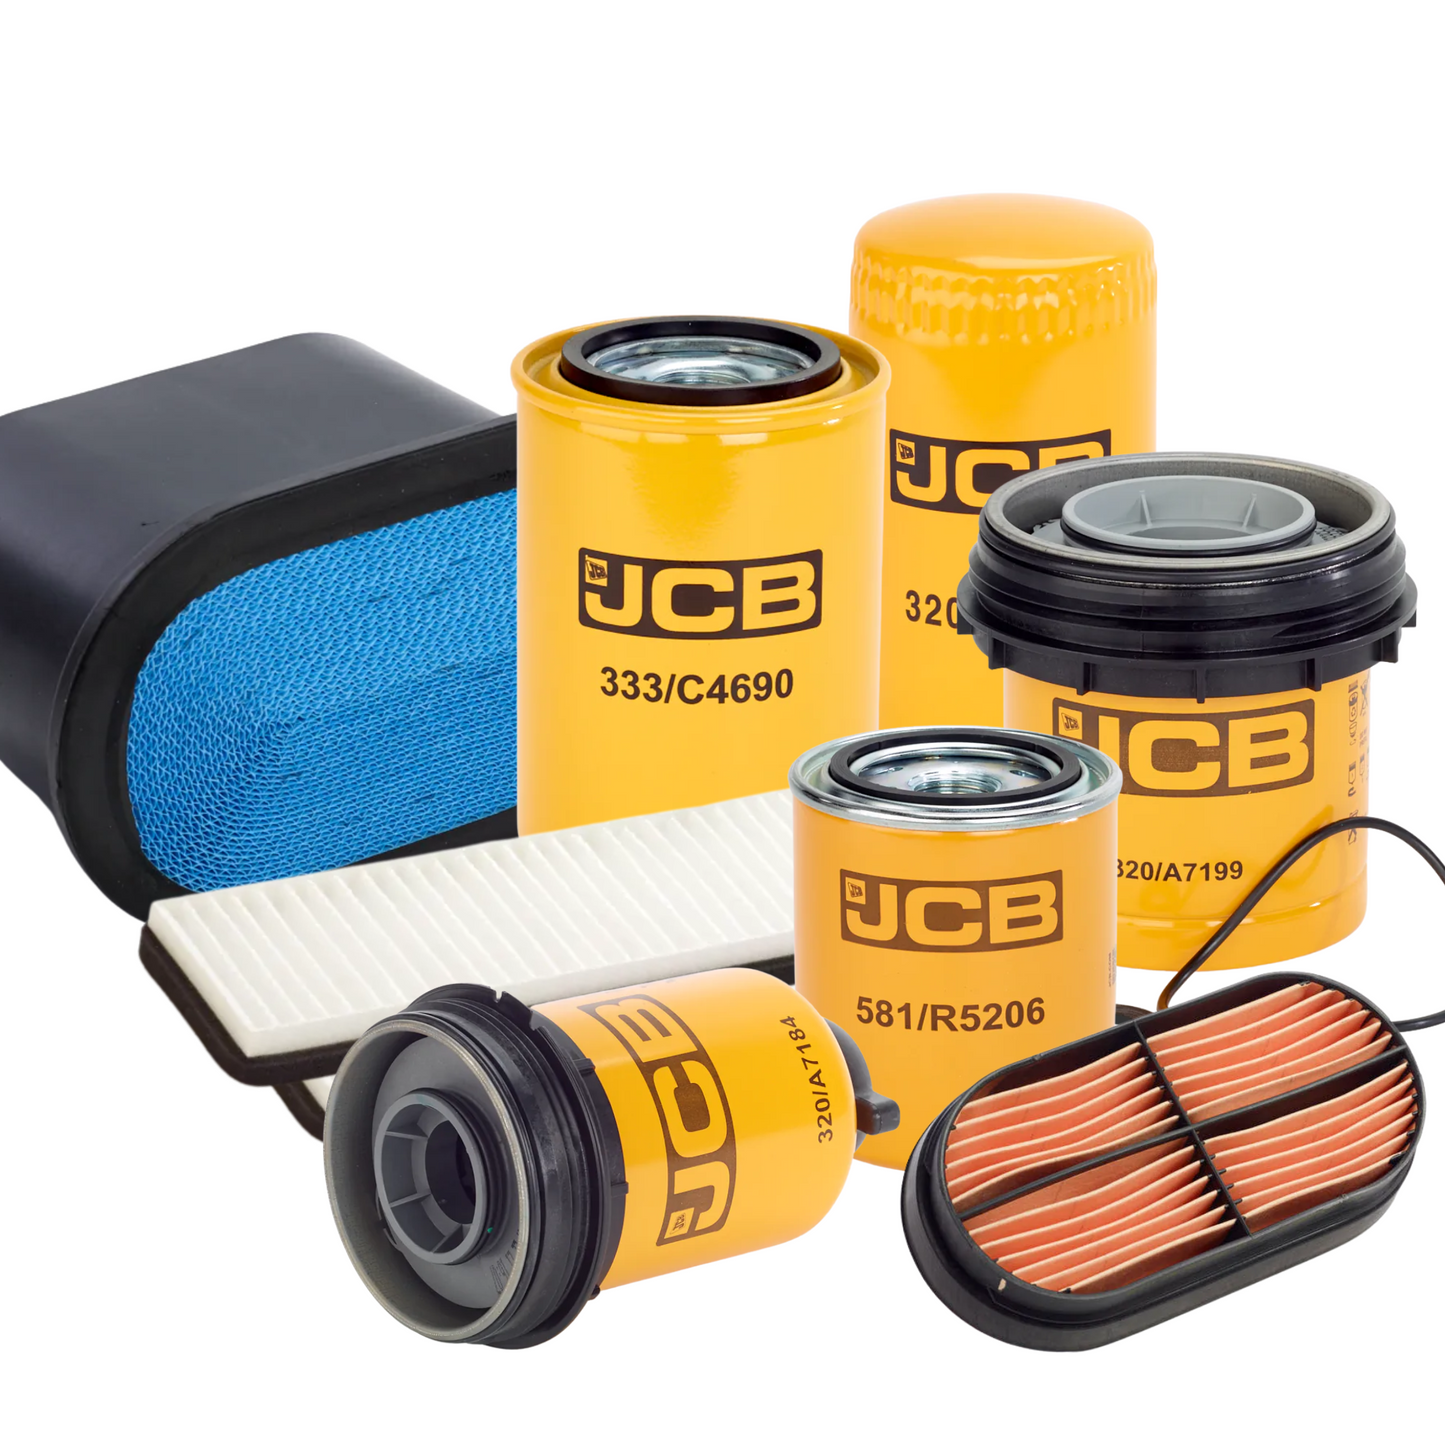 JCB 535-140 2000 Hour Filter Service Kit